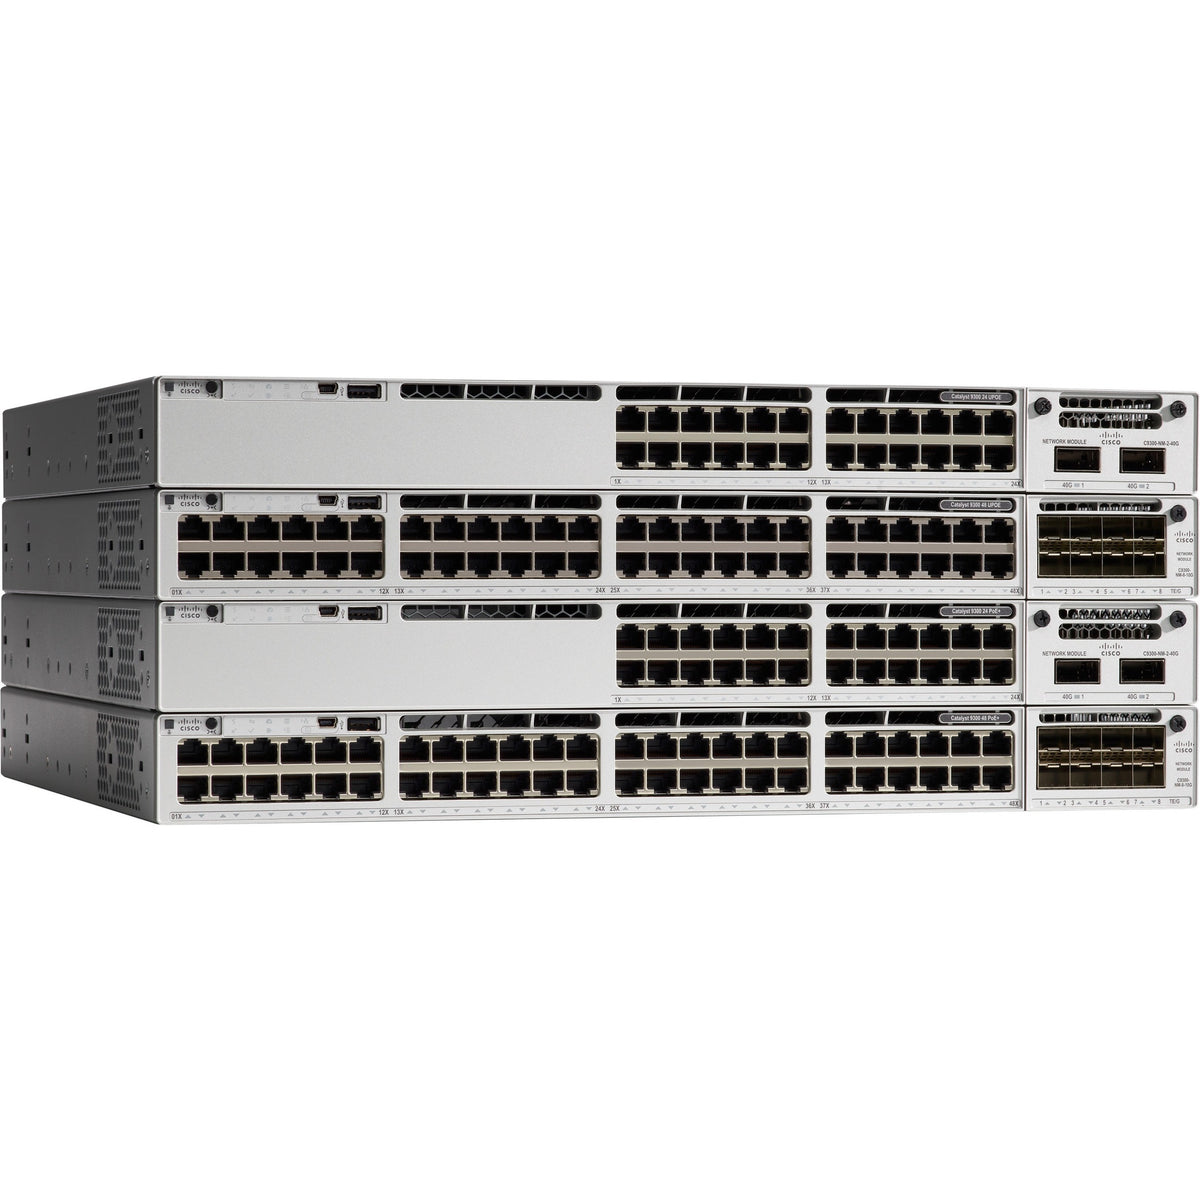 Cisco Catalyst 9300 24-port PoE+, Network Advantage - C9300-24P-A